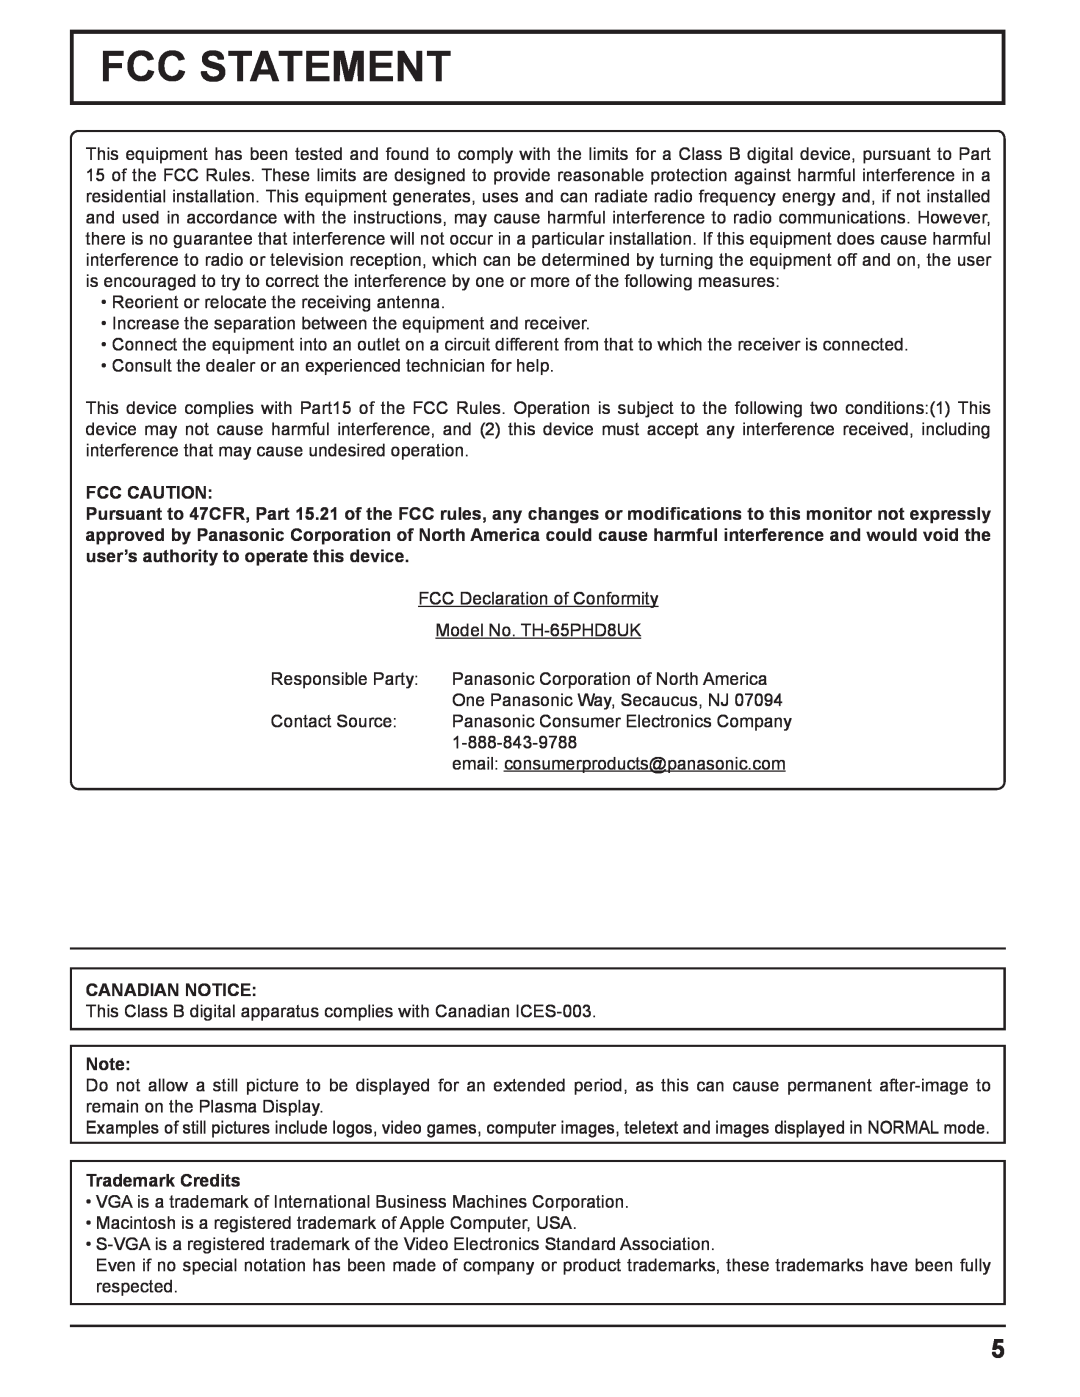 Panasonic TQBC2033 manual Fcc Statement, Fcc Caution, Canadian Notice, Trademark Credits 